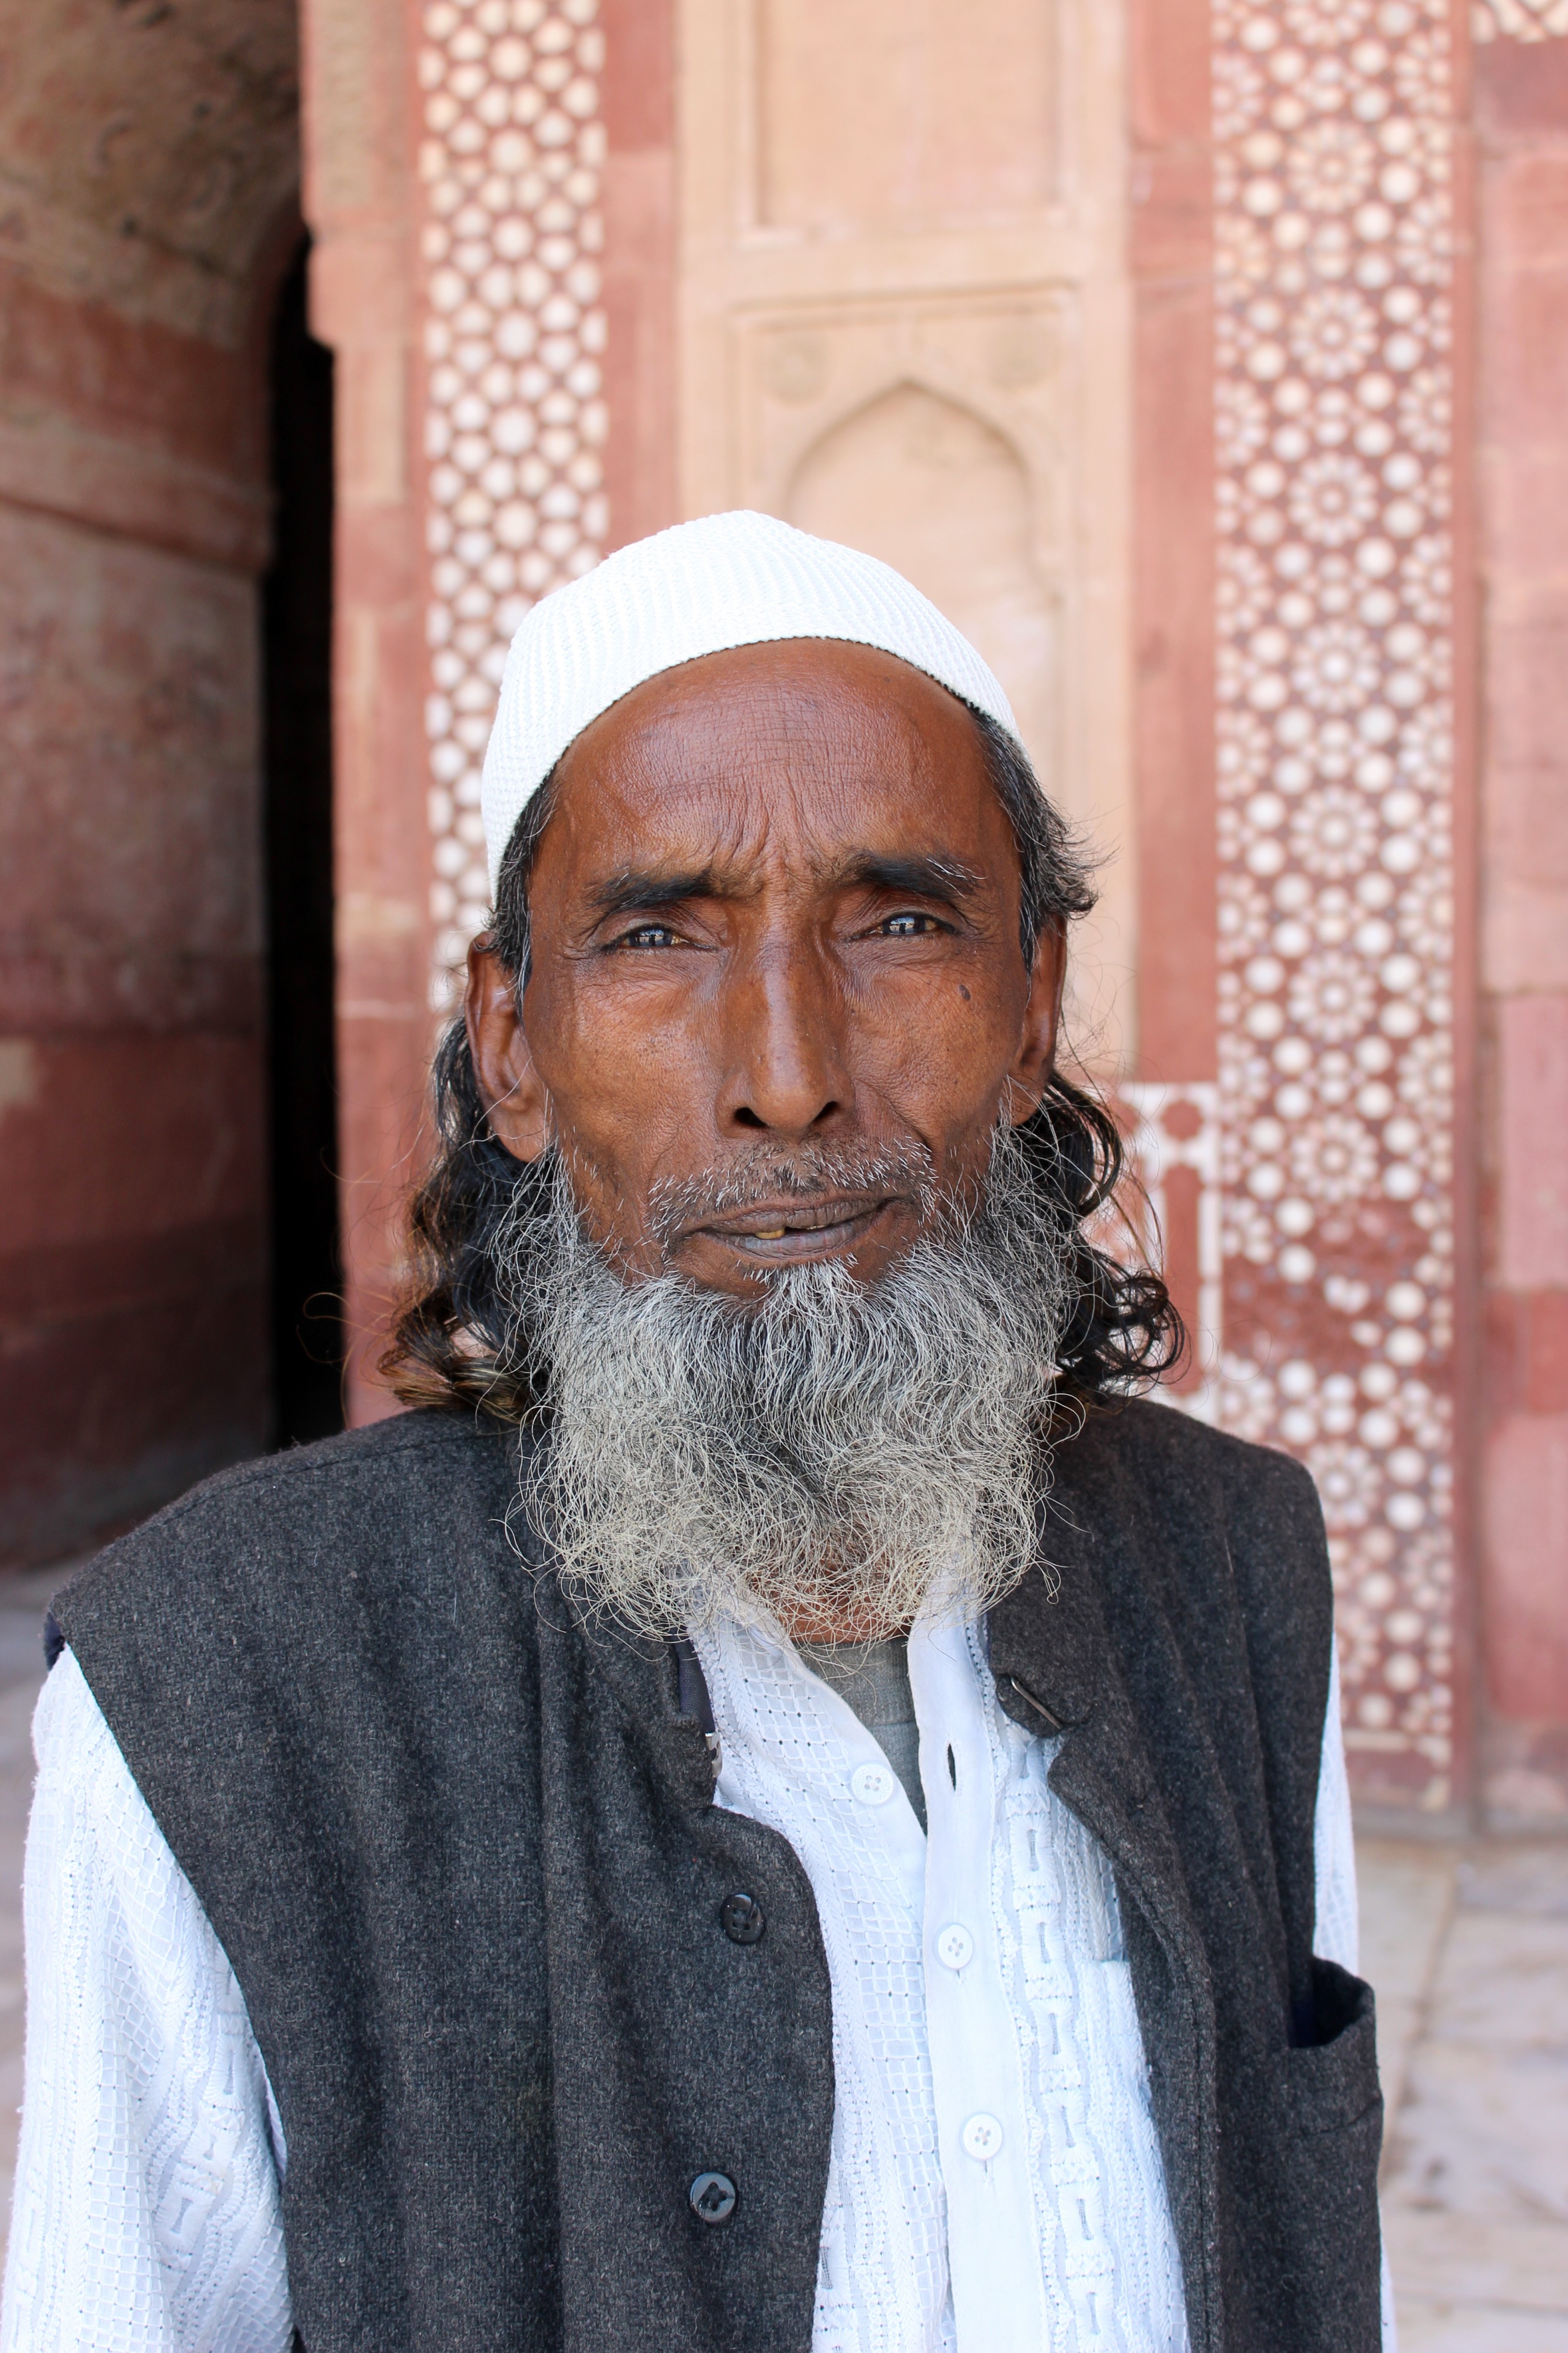 Old Muslim man 1 in India